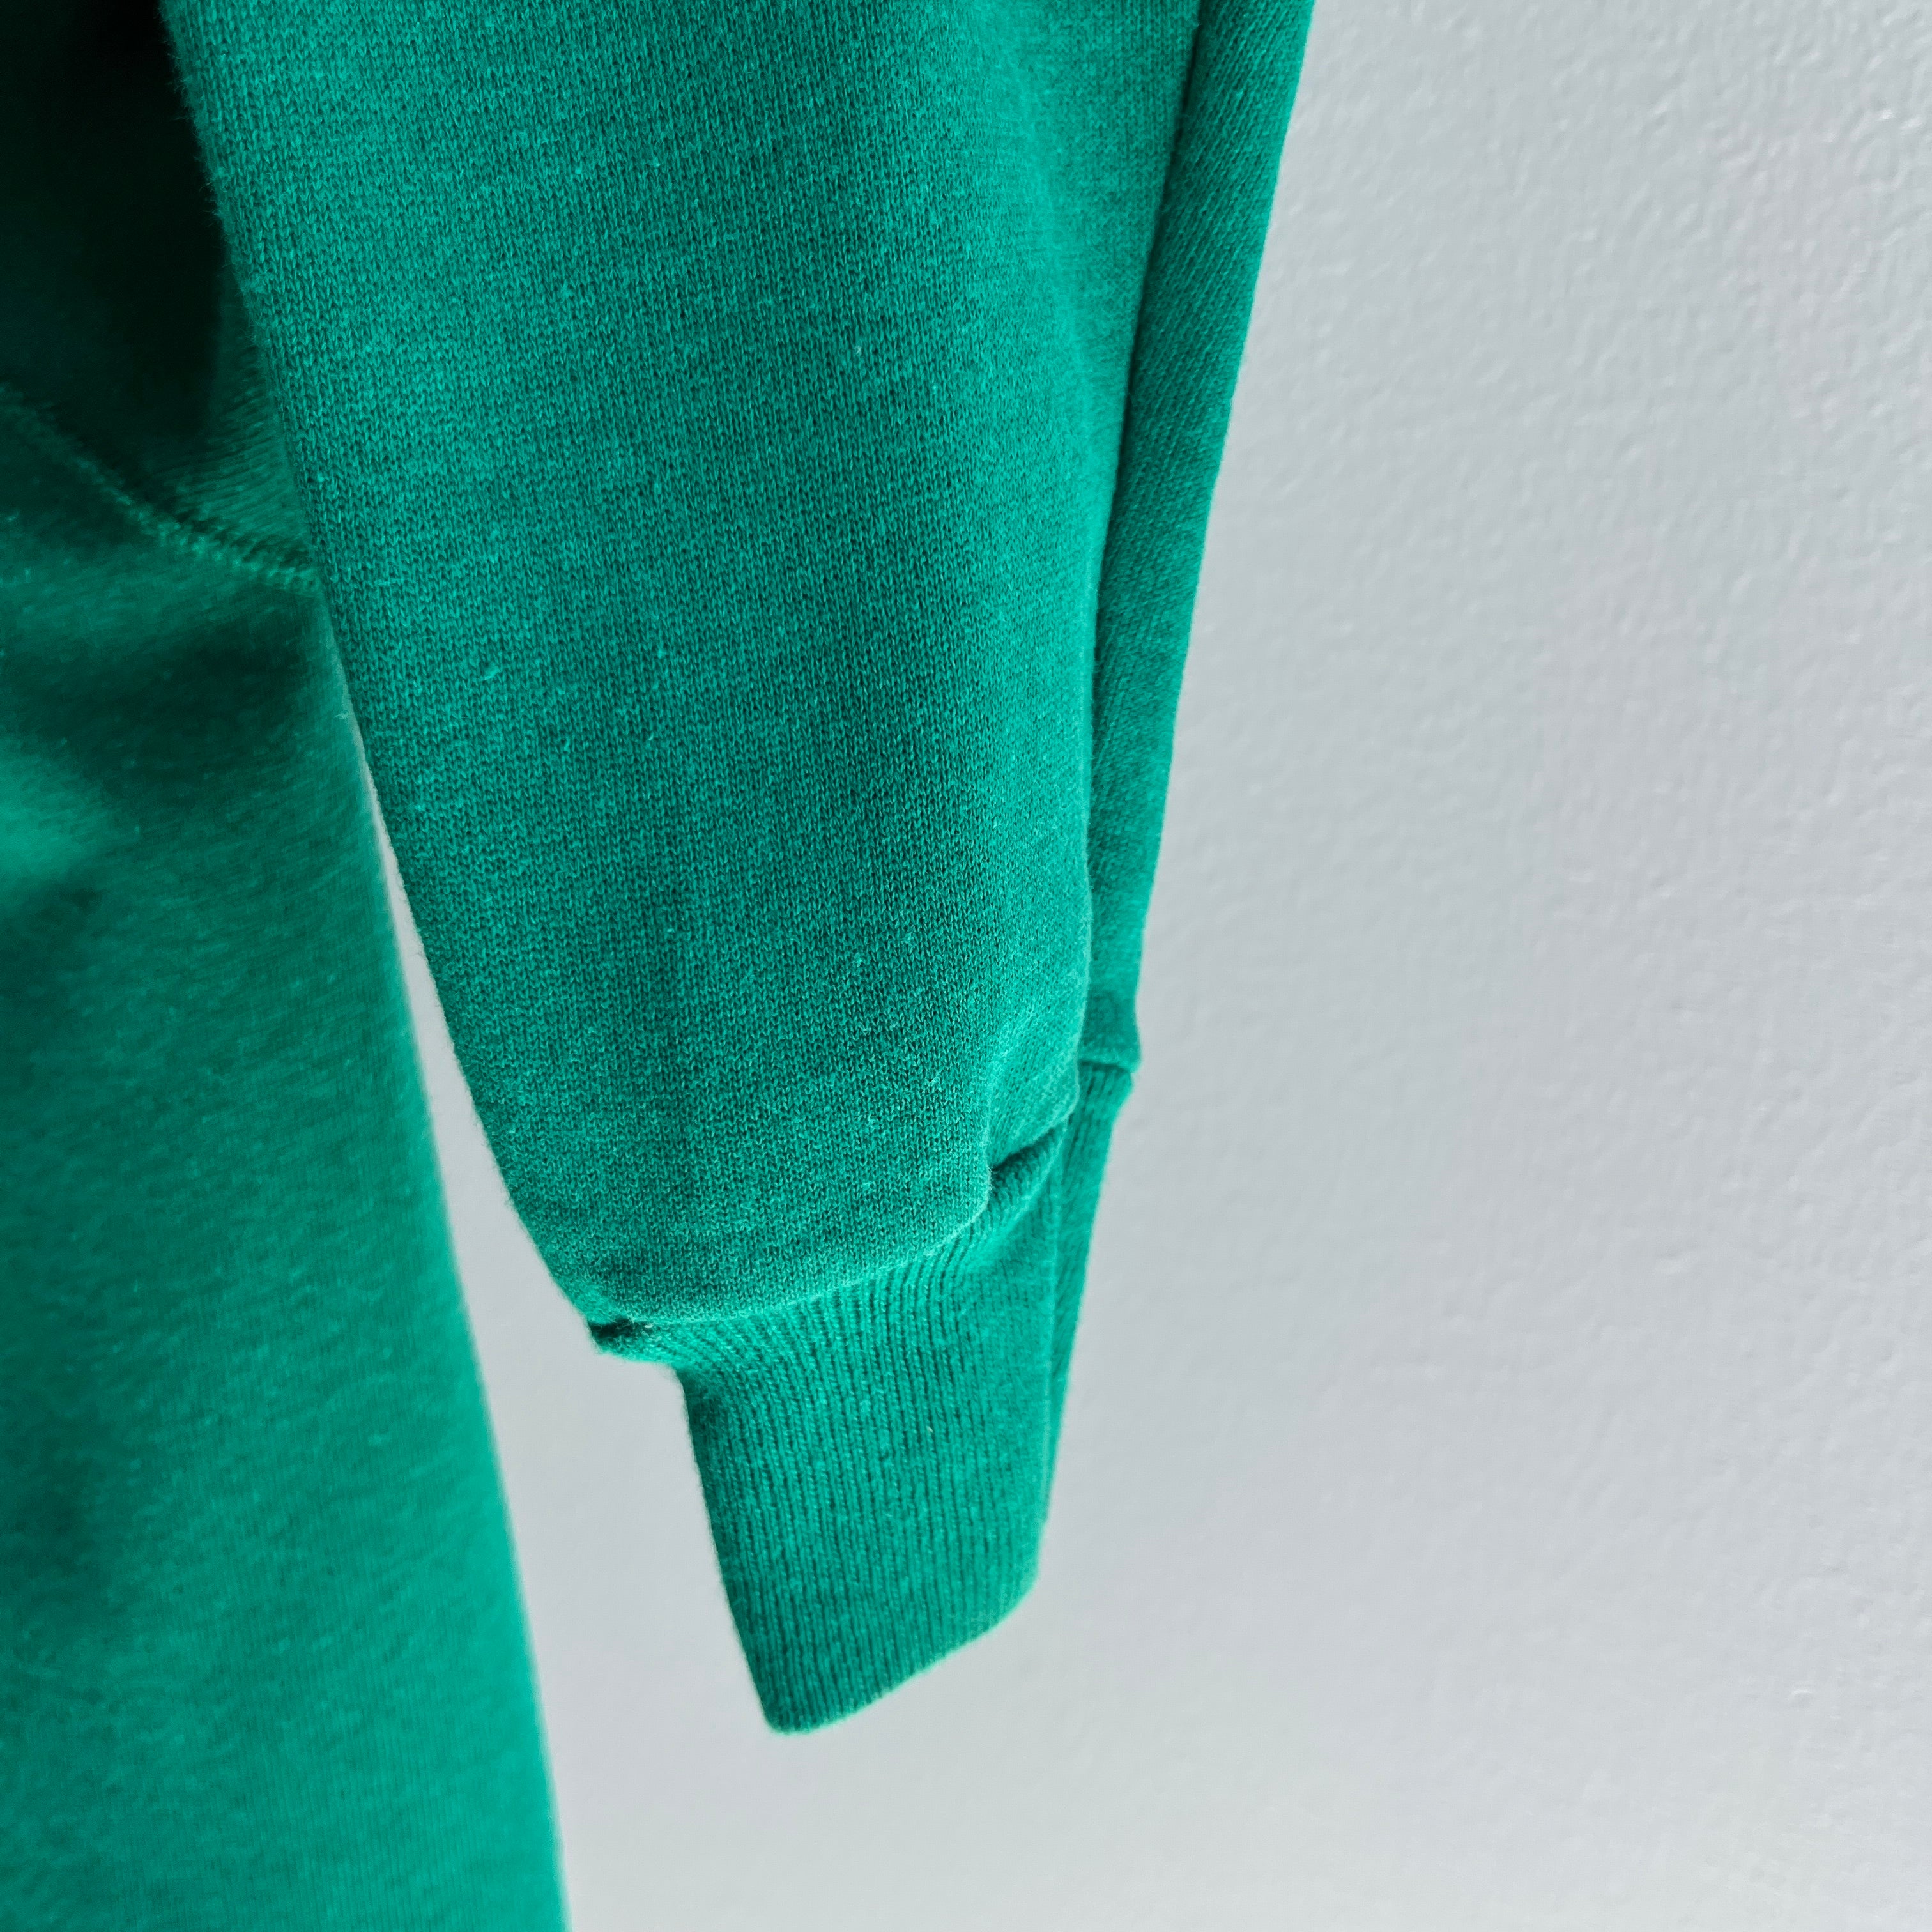 1990s Irish Spring Green Blank Raglan Sweatshirt